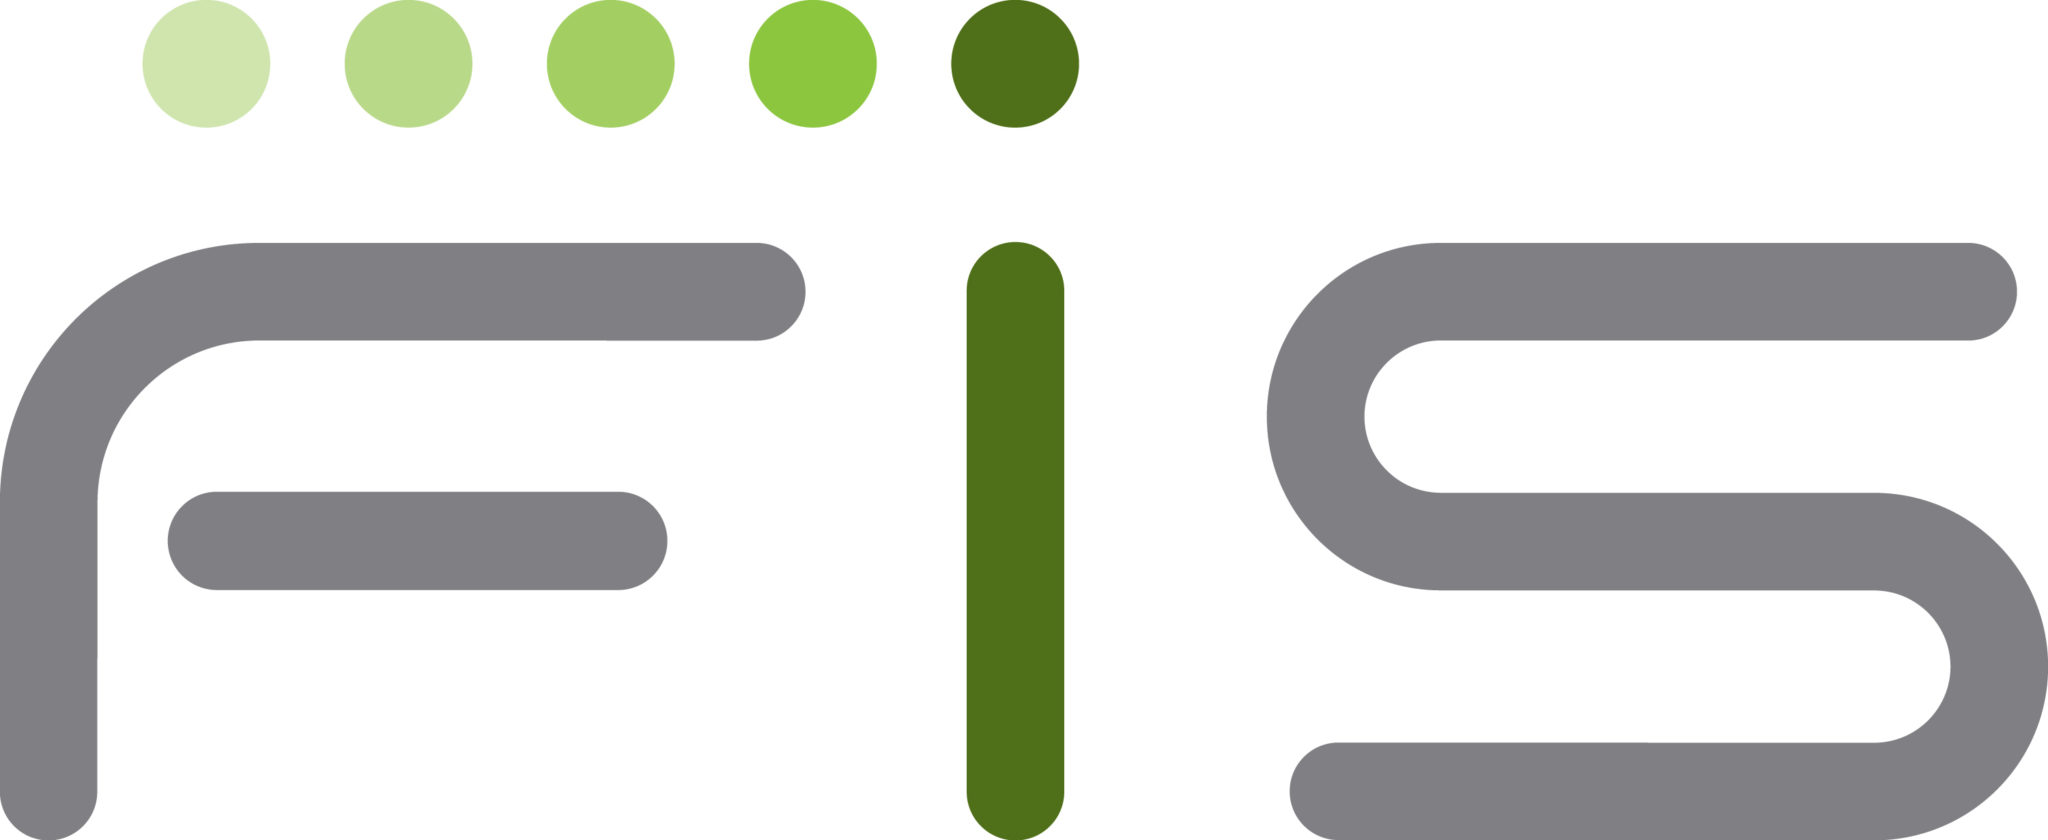 FIS-logo.jpg